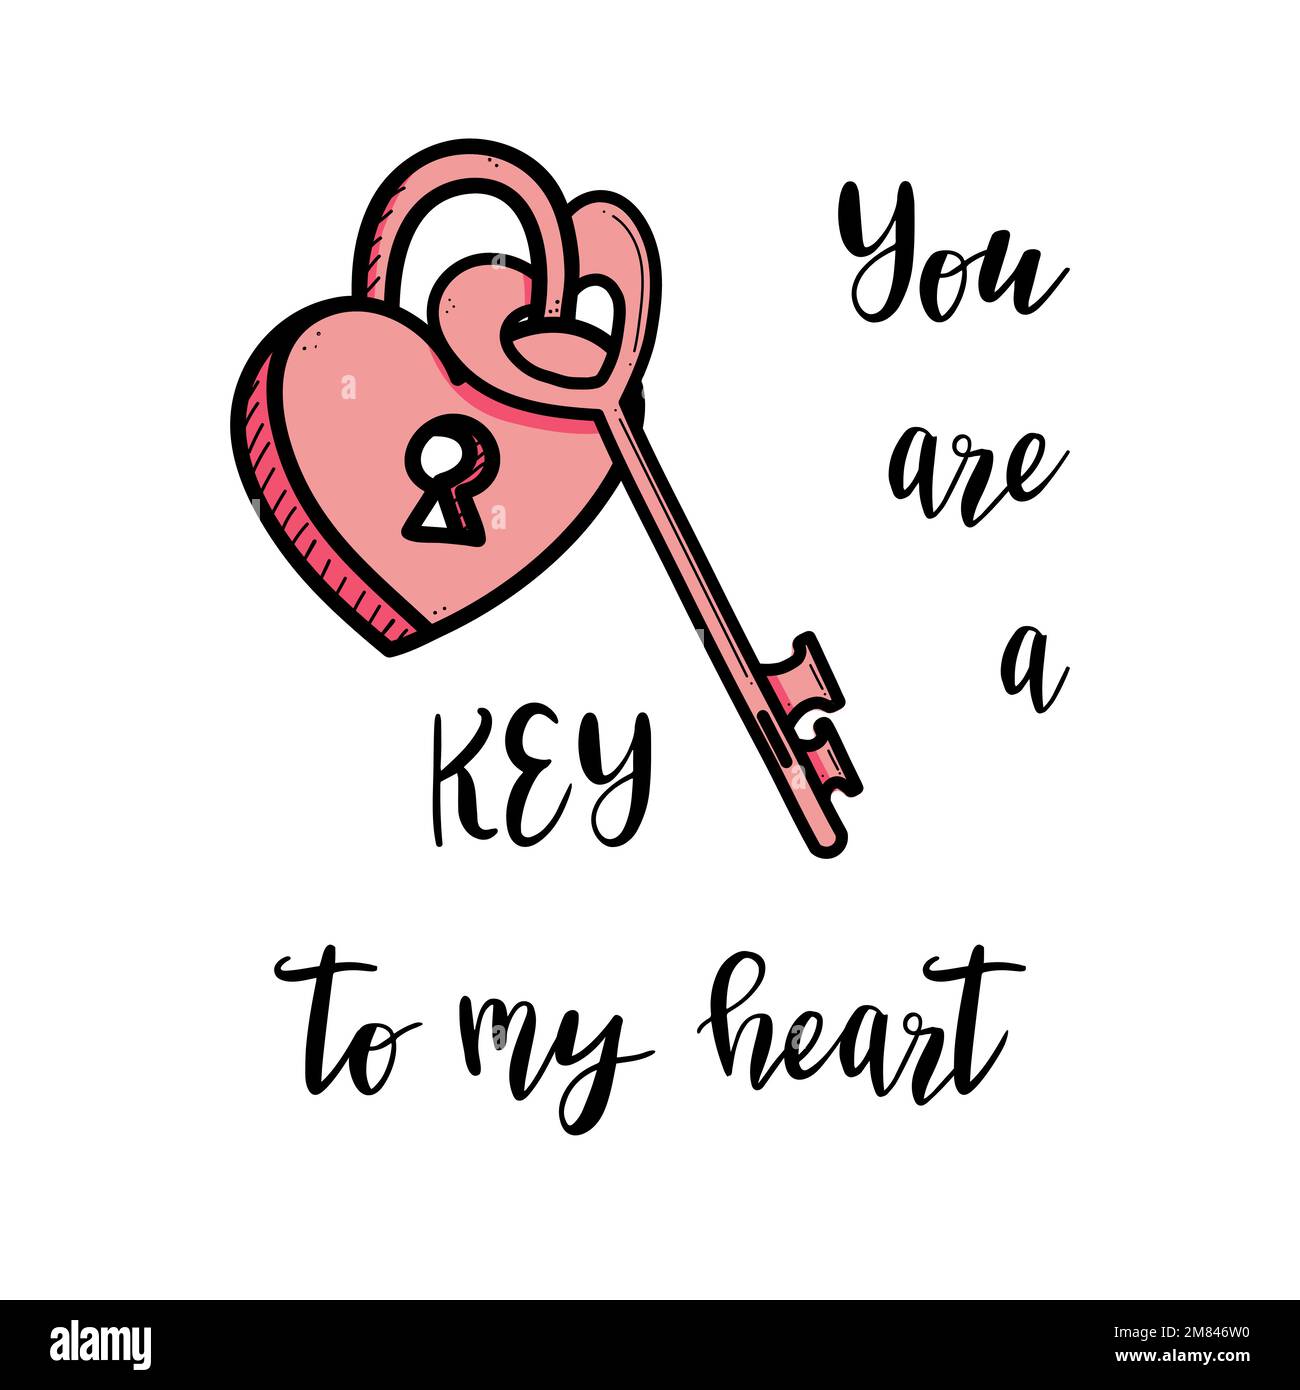 key to my heart graphics